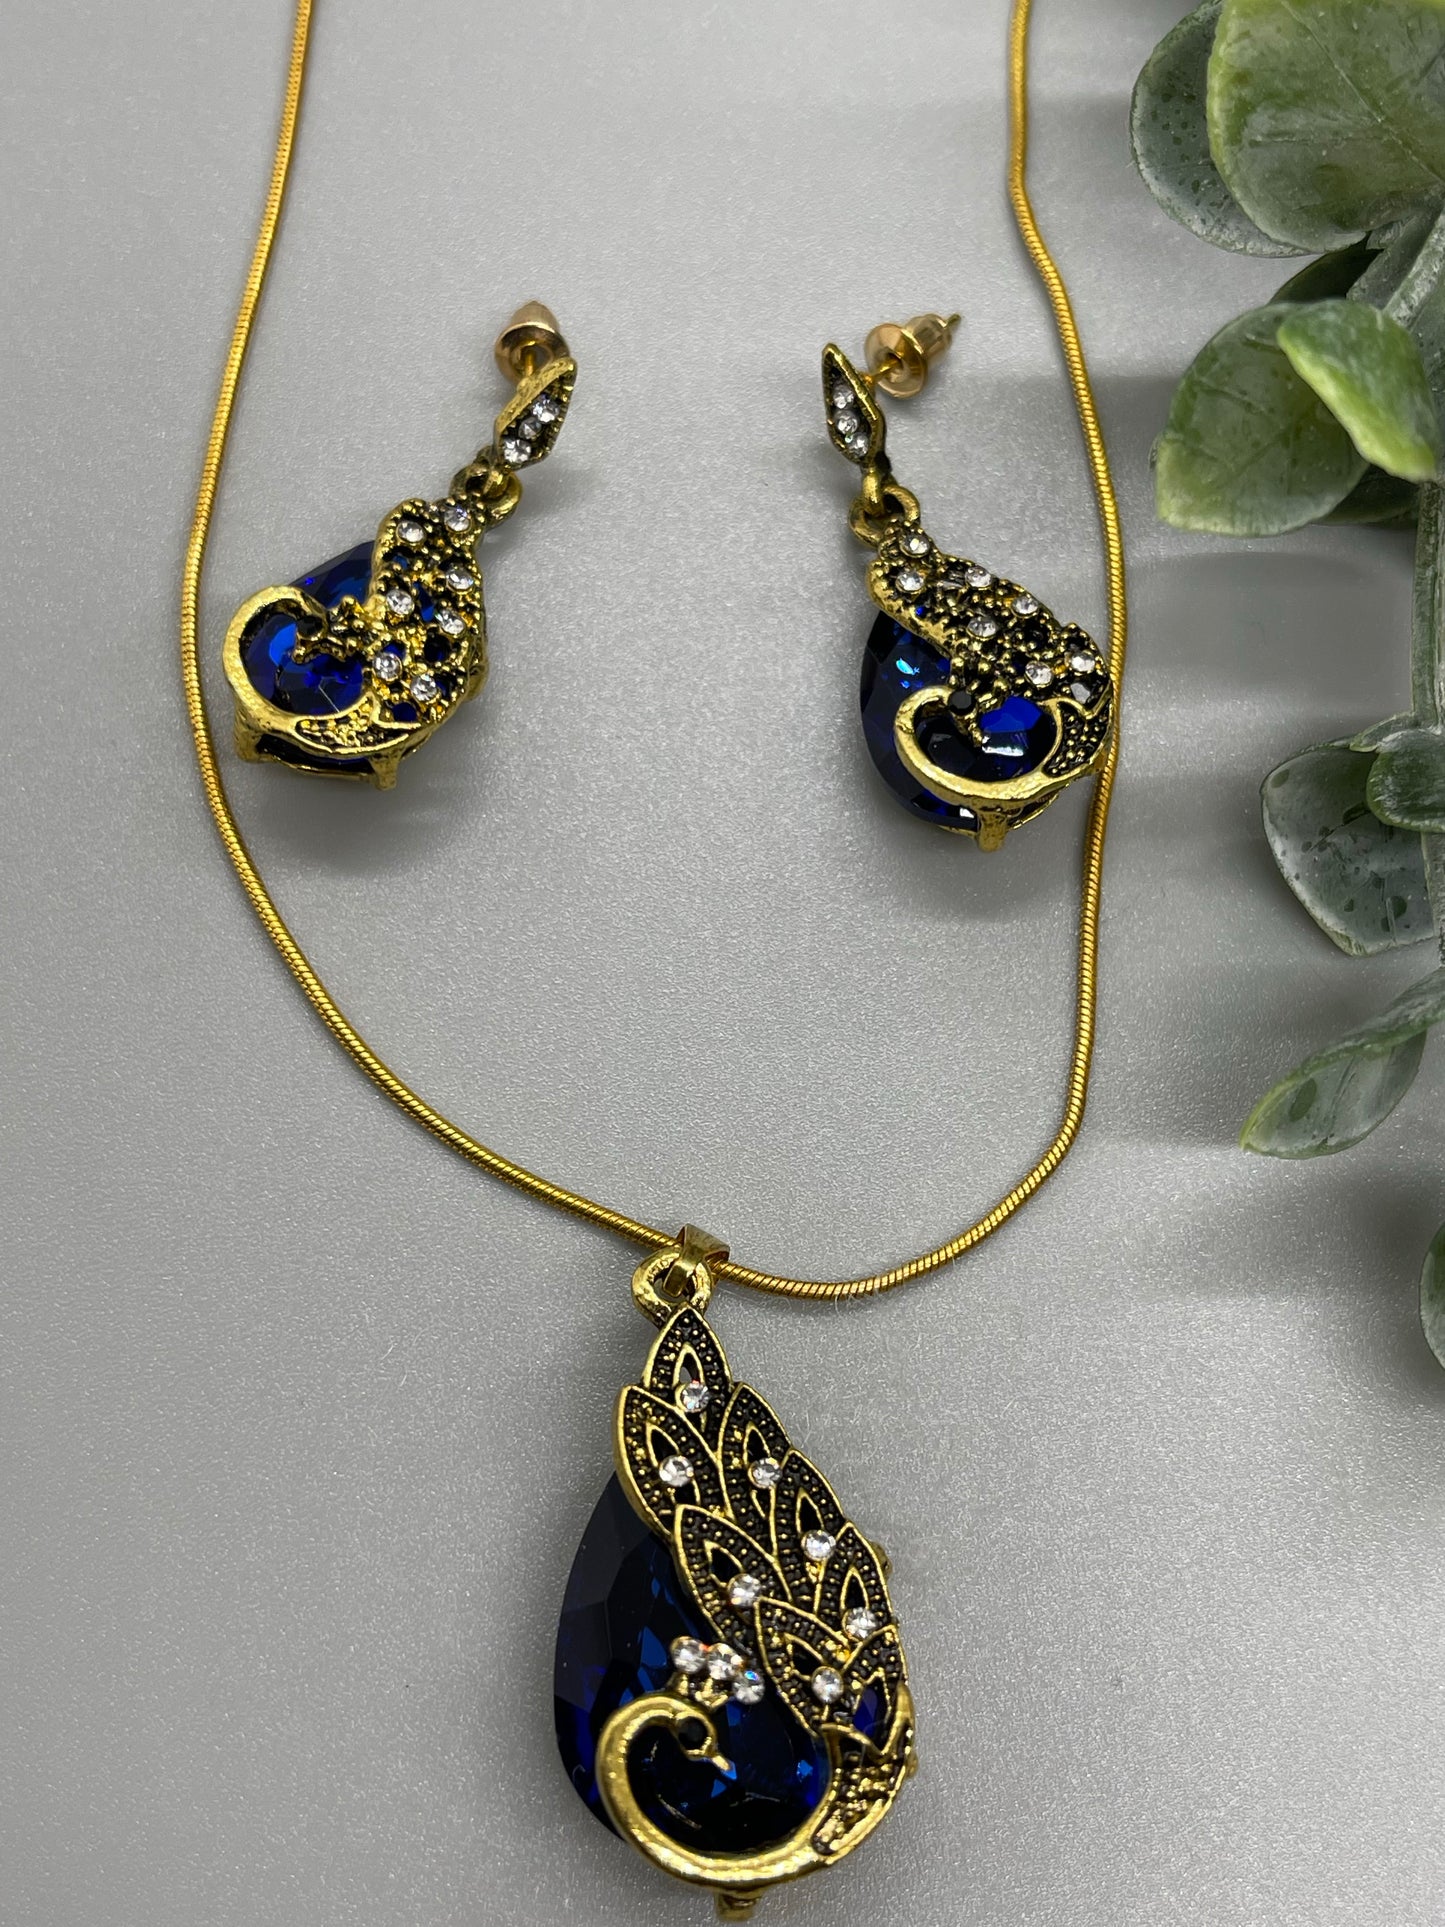 Royal blue Crystal peacock necklace earrings set